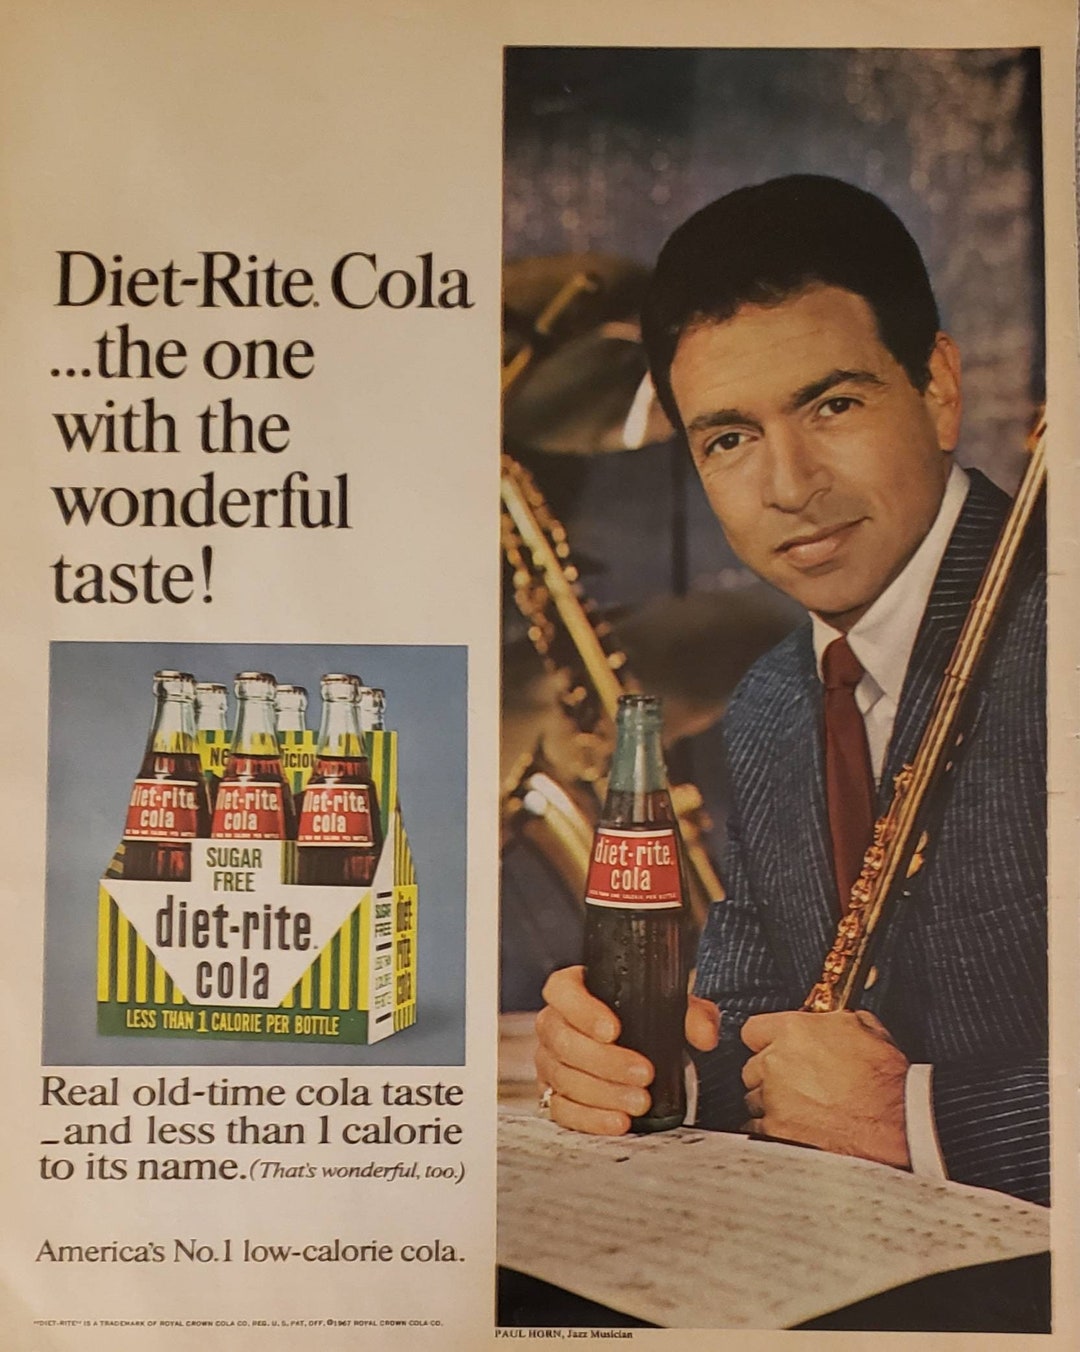 Banania (Drinks) 1967 — Drinks — Advertisement